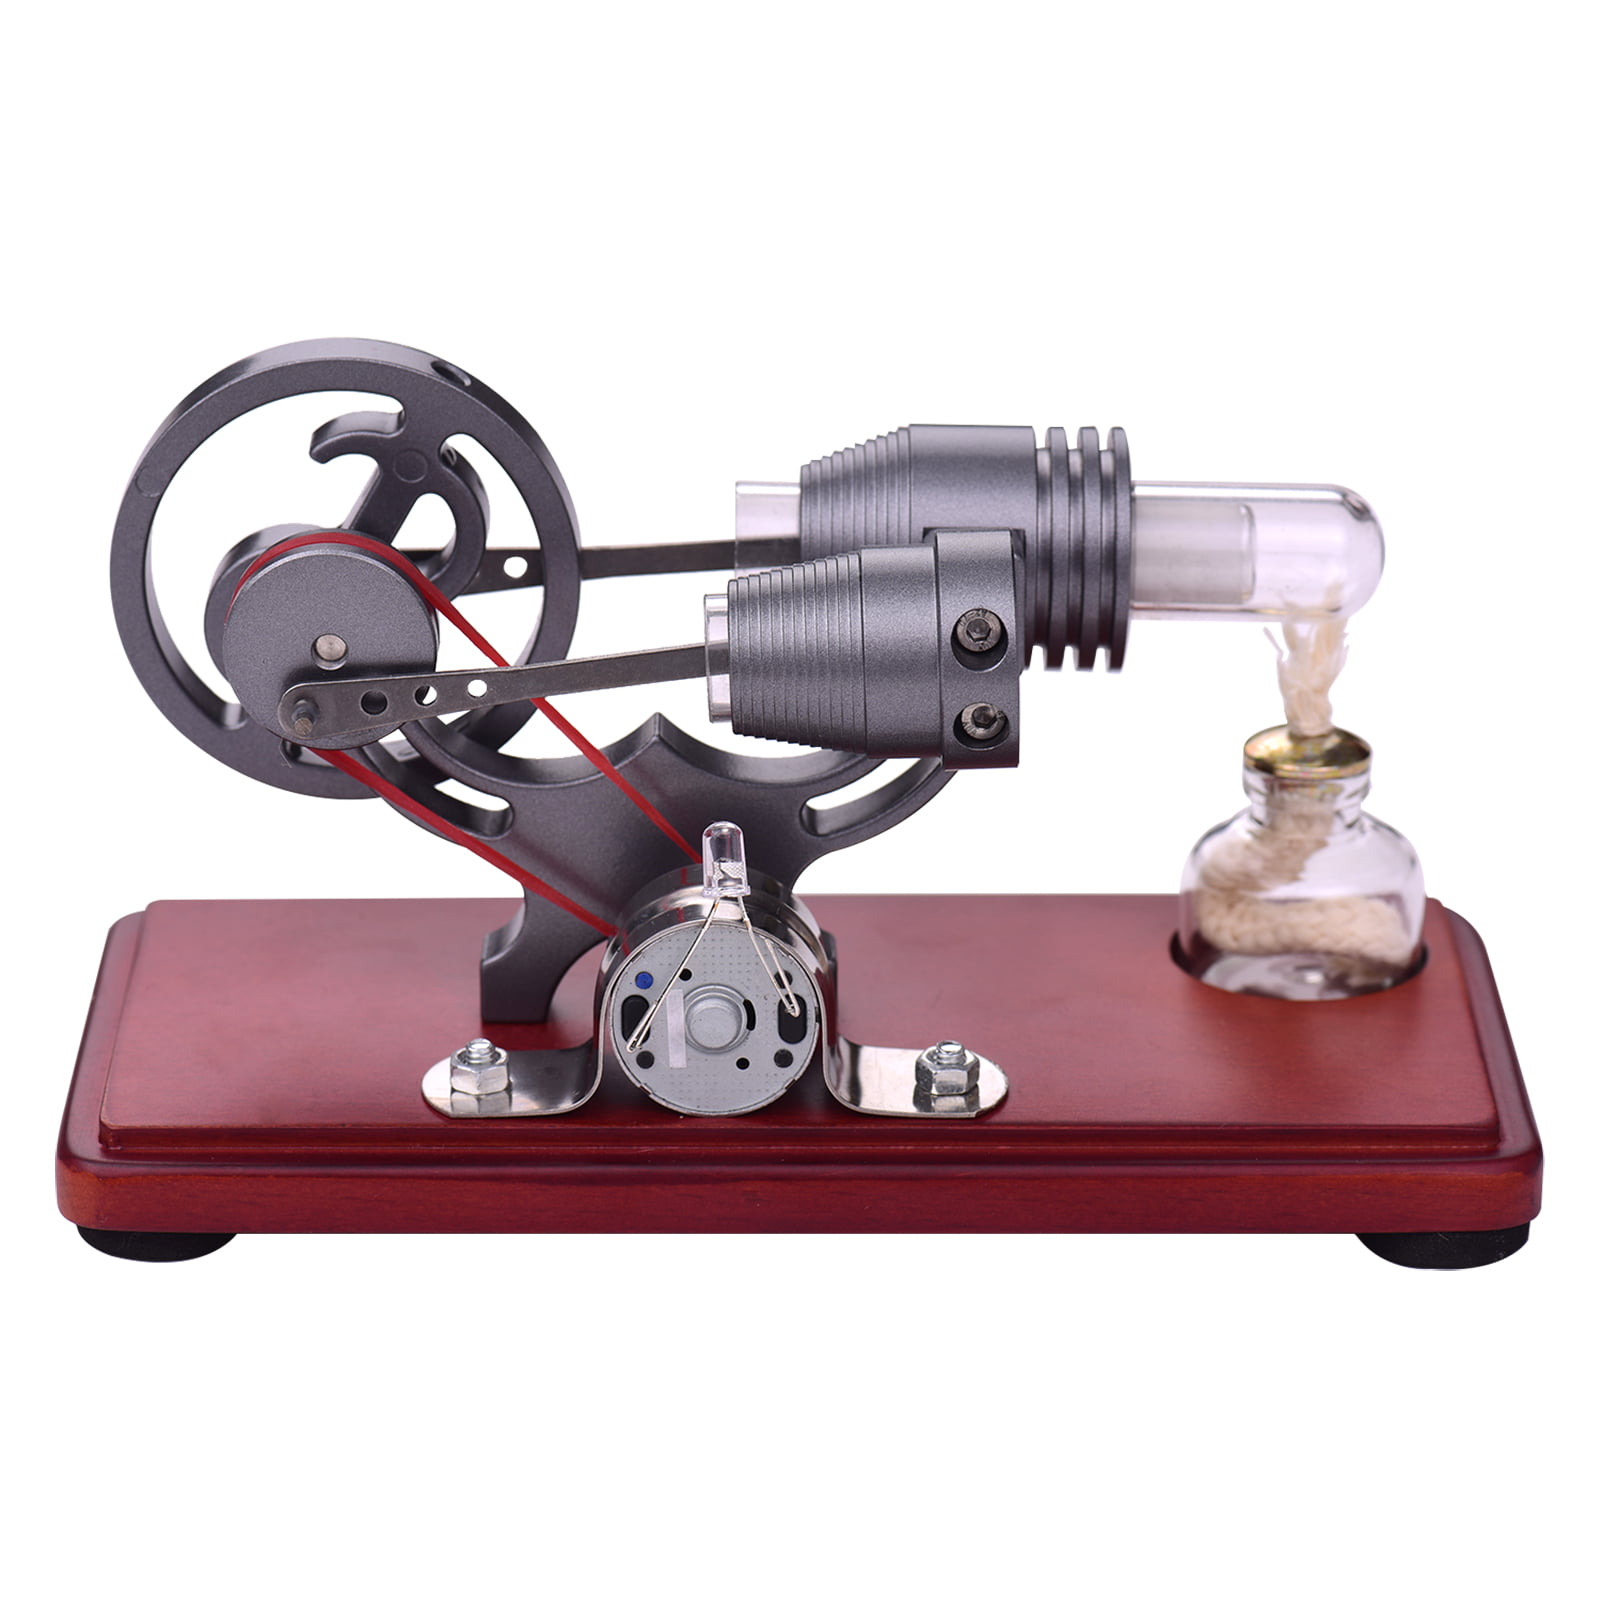 DIY Air-Heating Electricity Generator Model Toy Hot Air Stirling Engine Motor